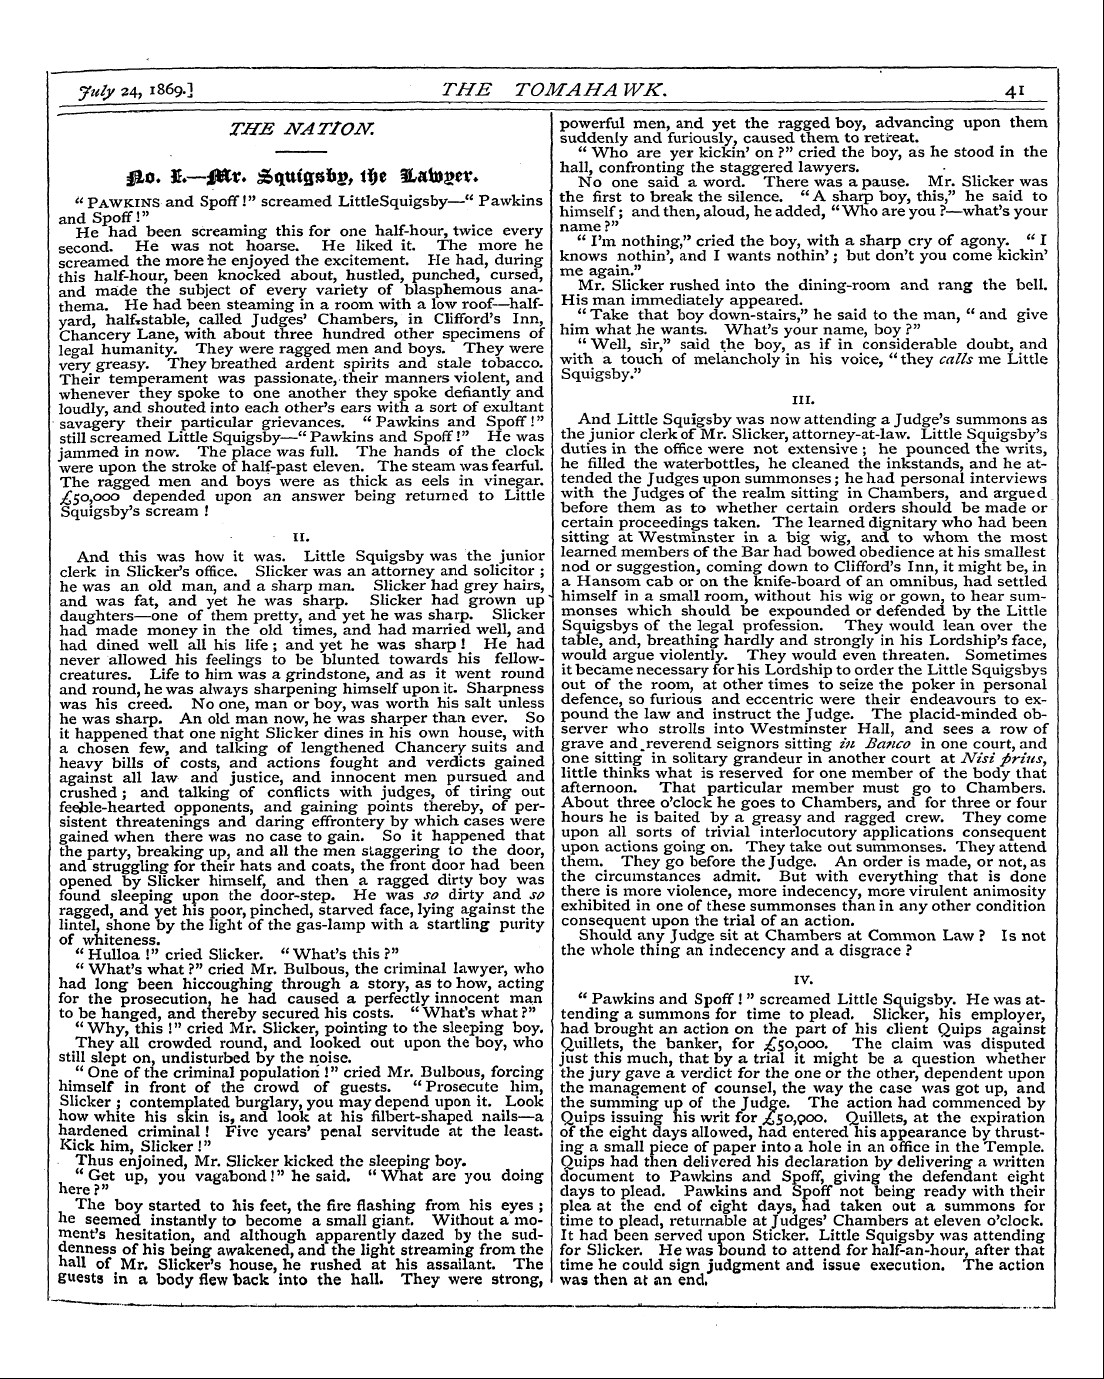 Tomahawk (1867-1870): jS F Y, 1st edition - The Jvat/Ojv.